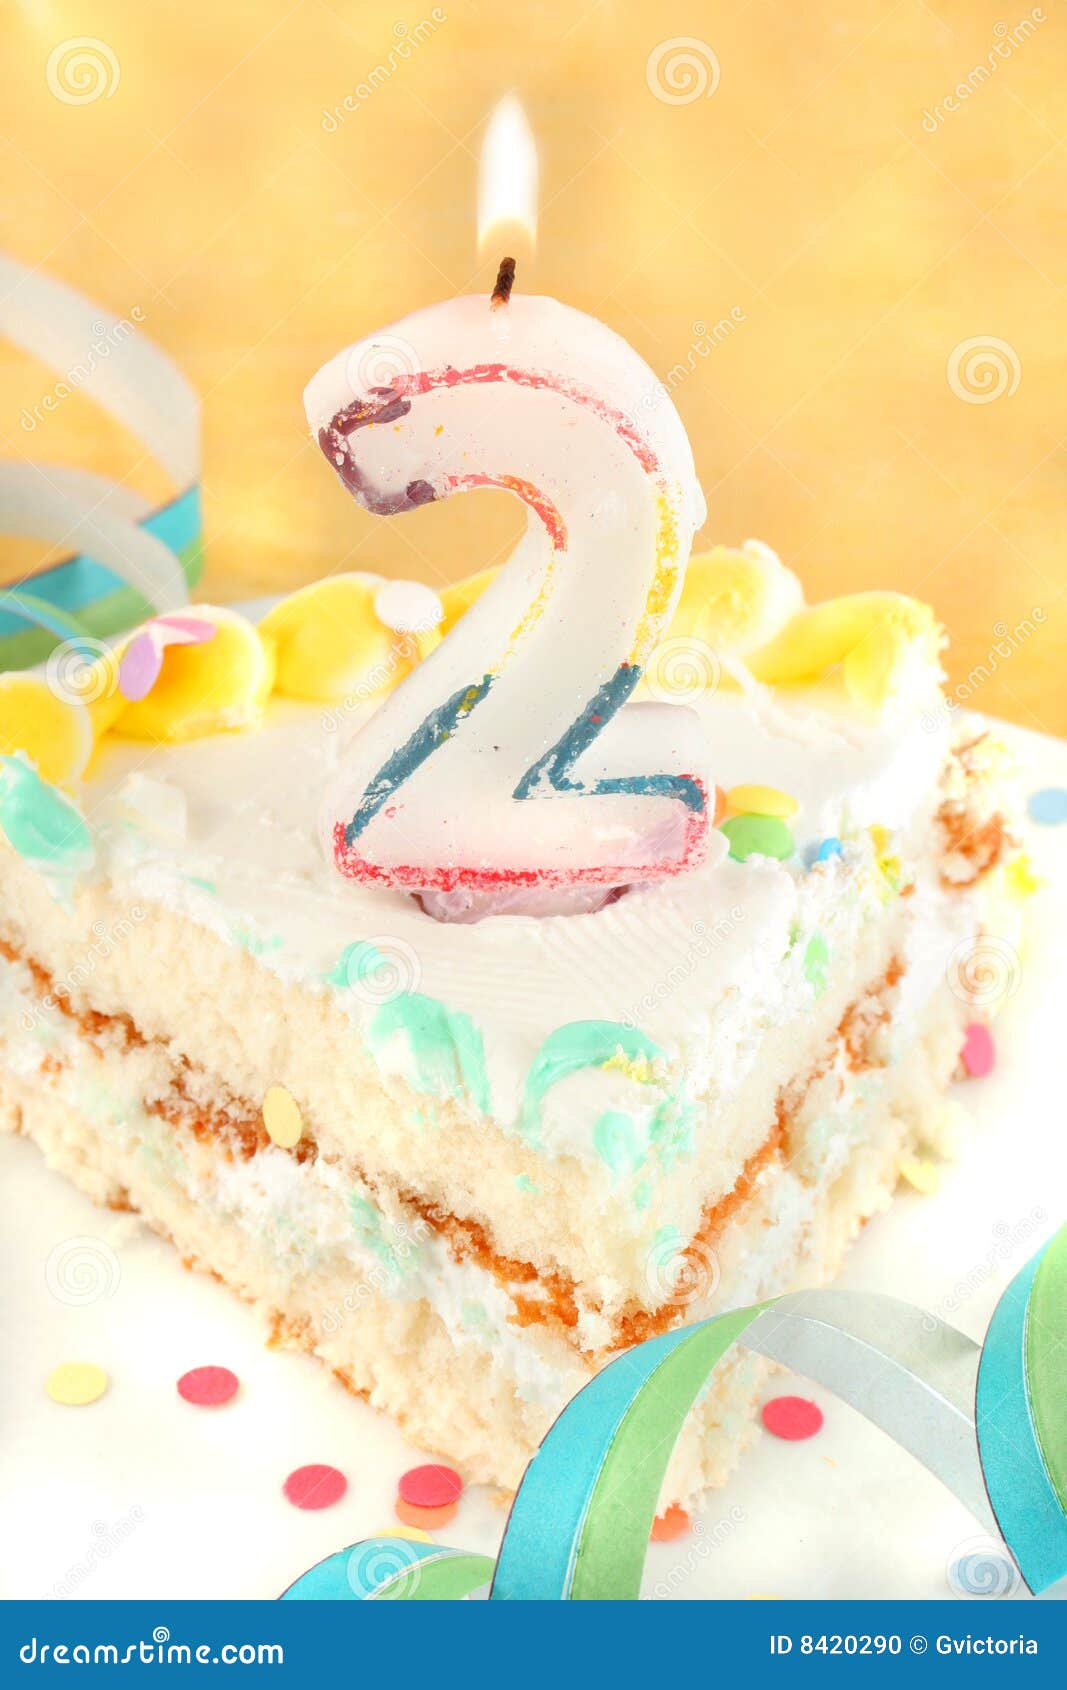 Slice second birthday cake stock photo. Image of sugar - 8420290